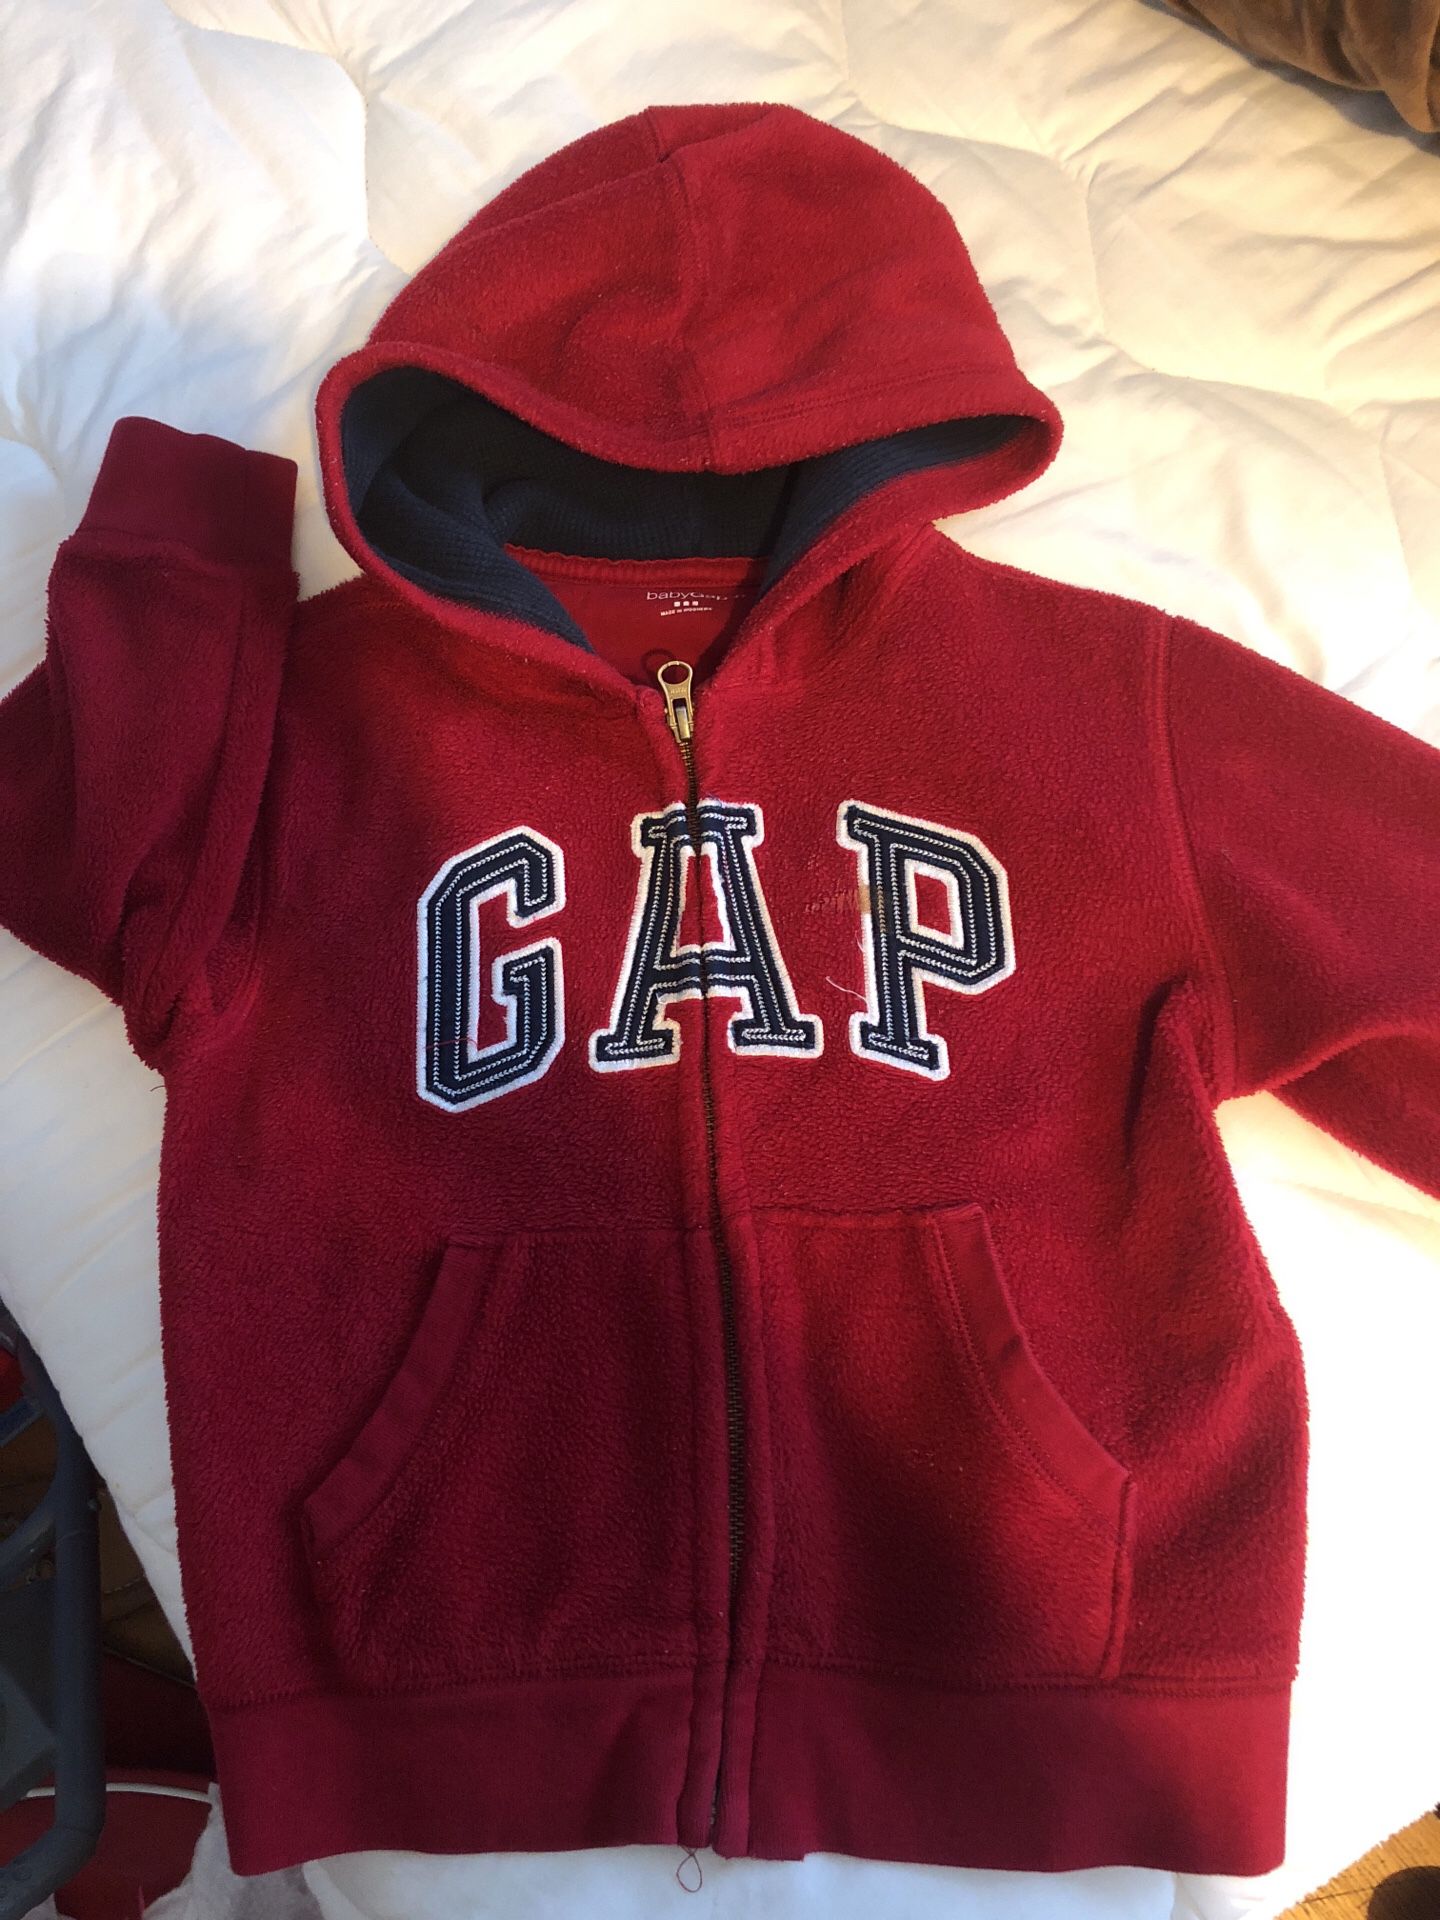 Baby gap red zip up hoodie size 4T